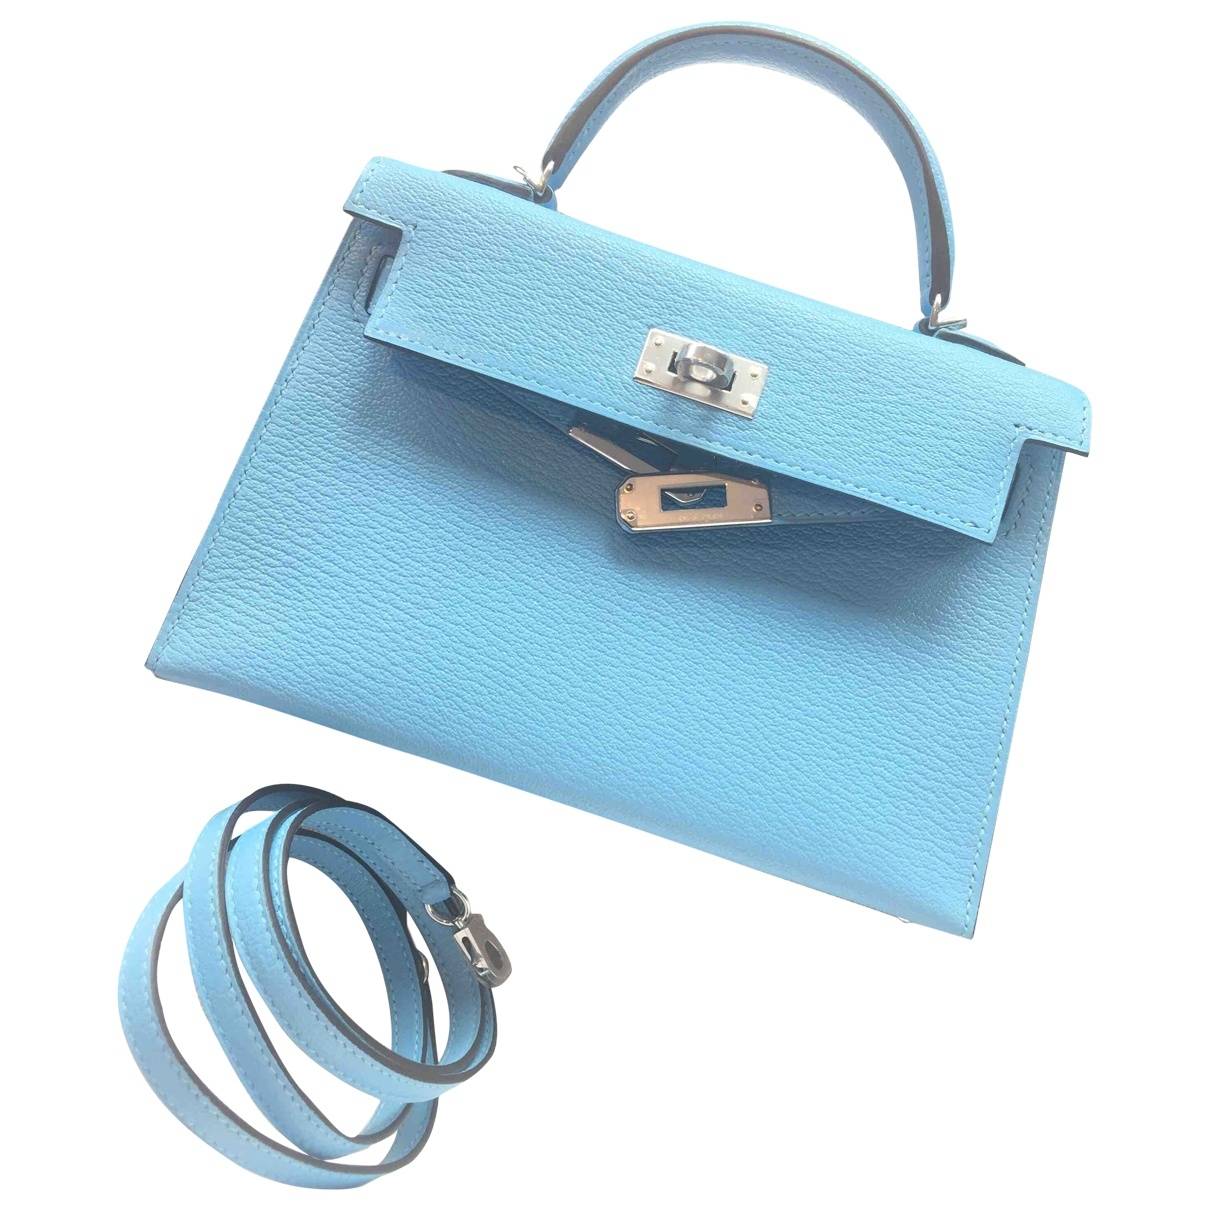 blue kelly bag